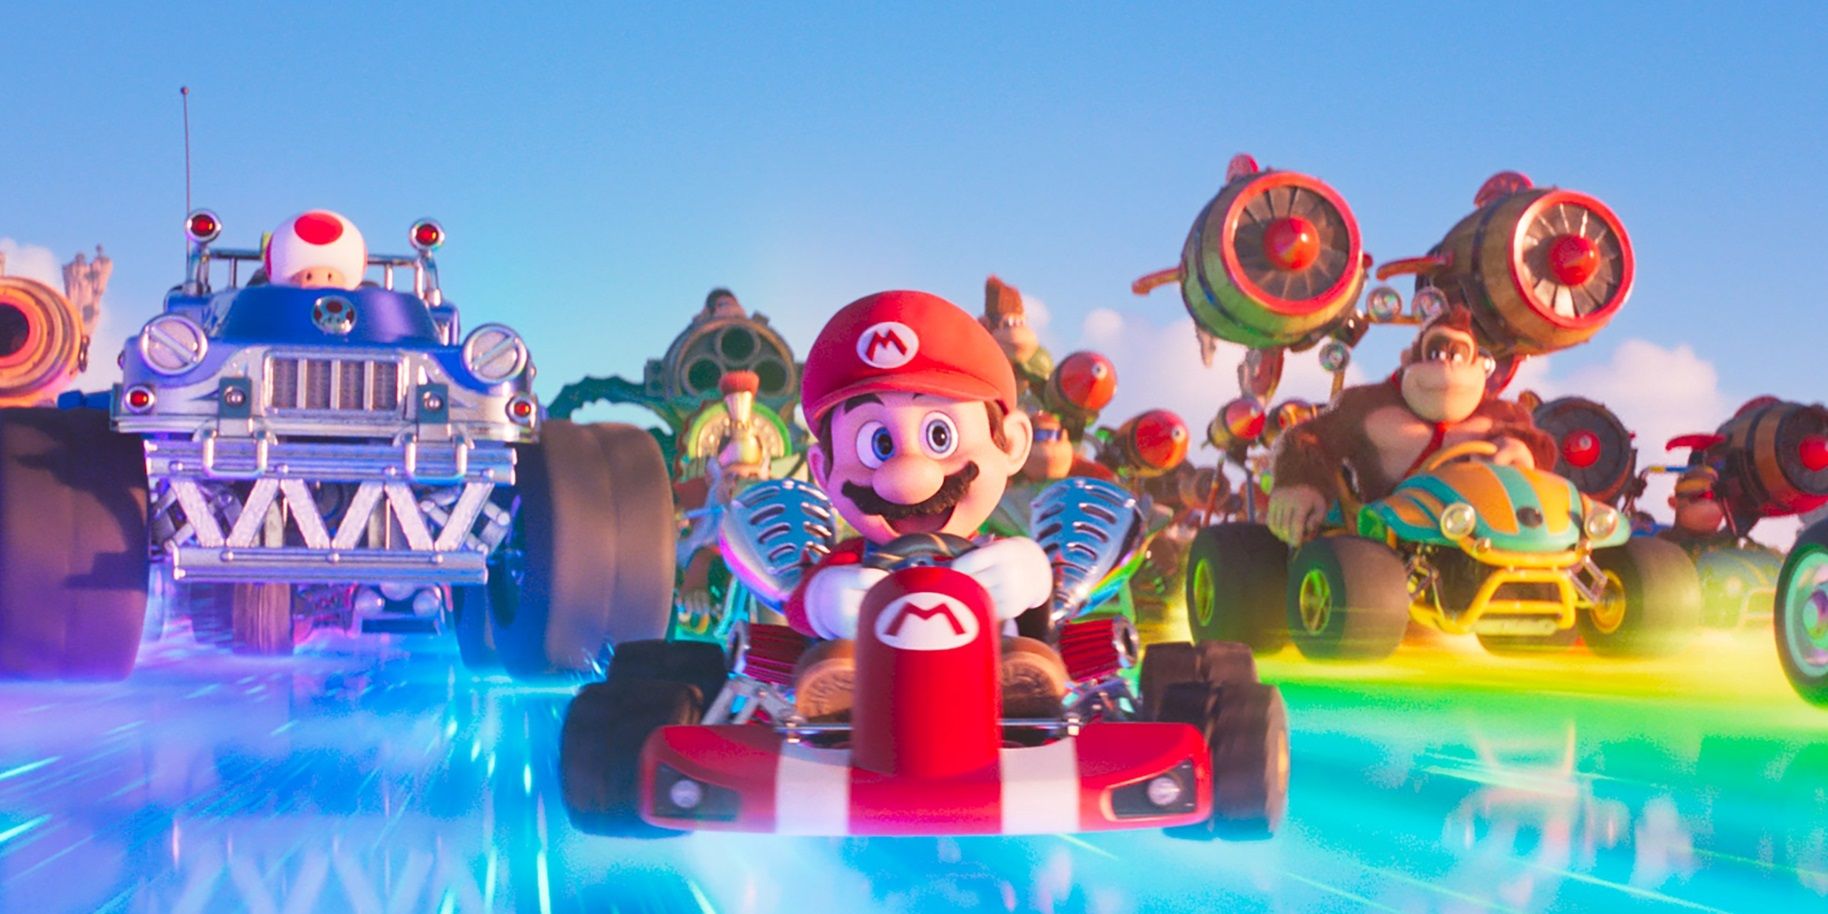 The Mario Kart chase scene in The Super Mario Bros Movie